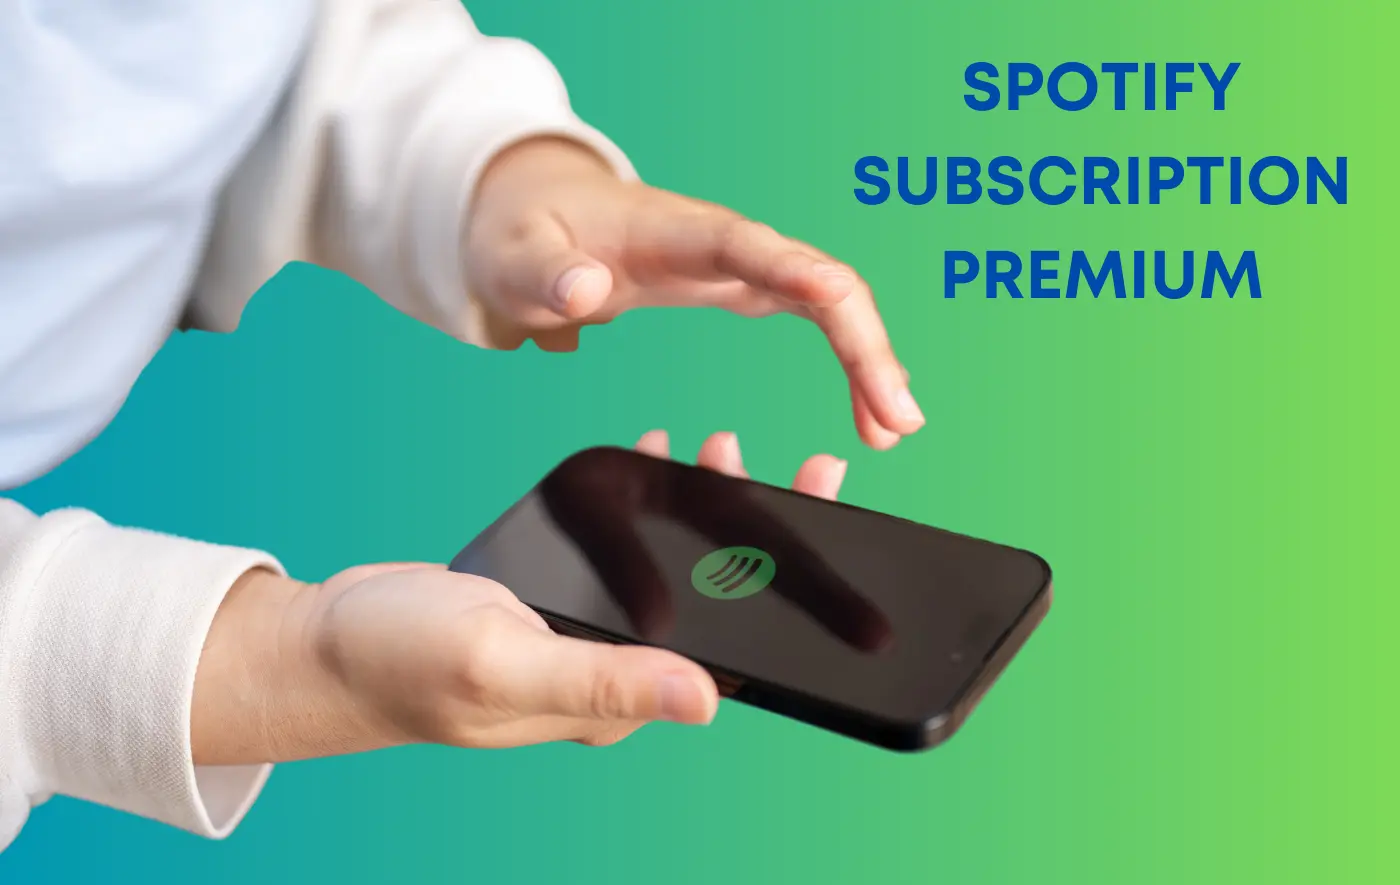 Spotify Subscription
Premium plan